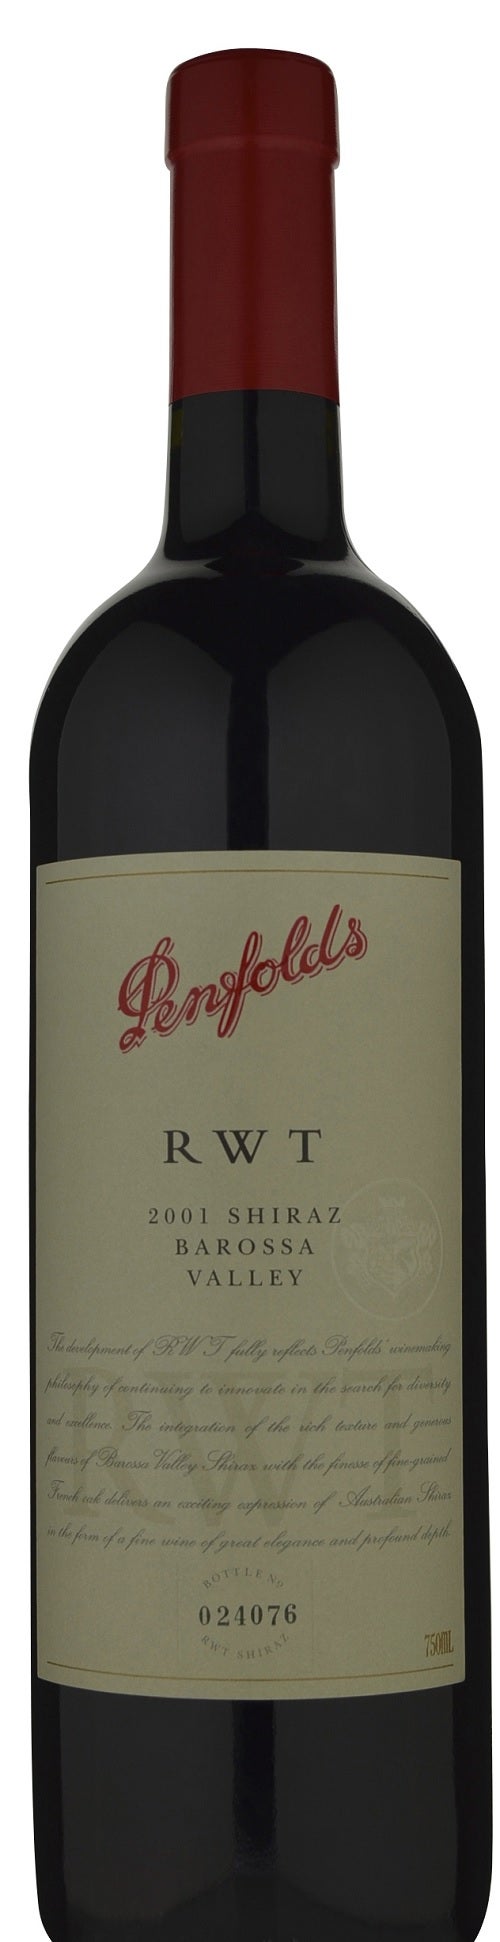 Penfolds RWT Barossa Valley Shiraz 2001 Wine